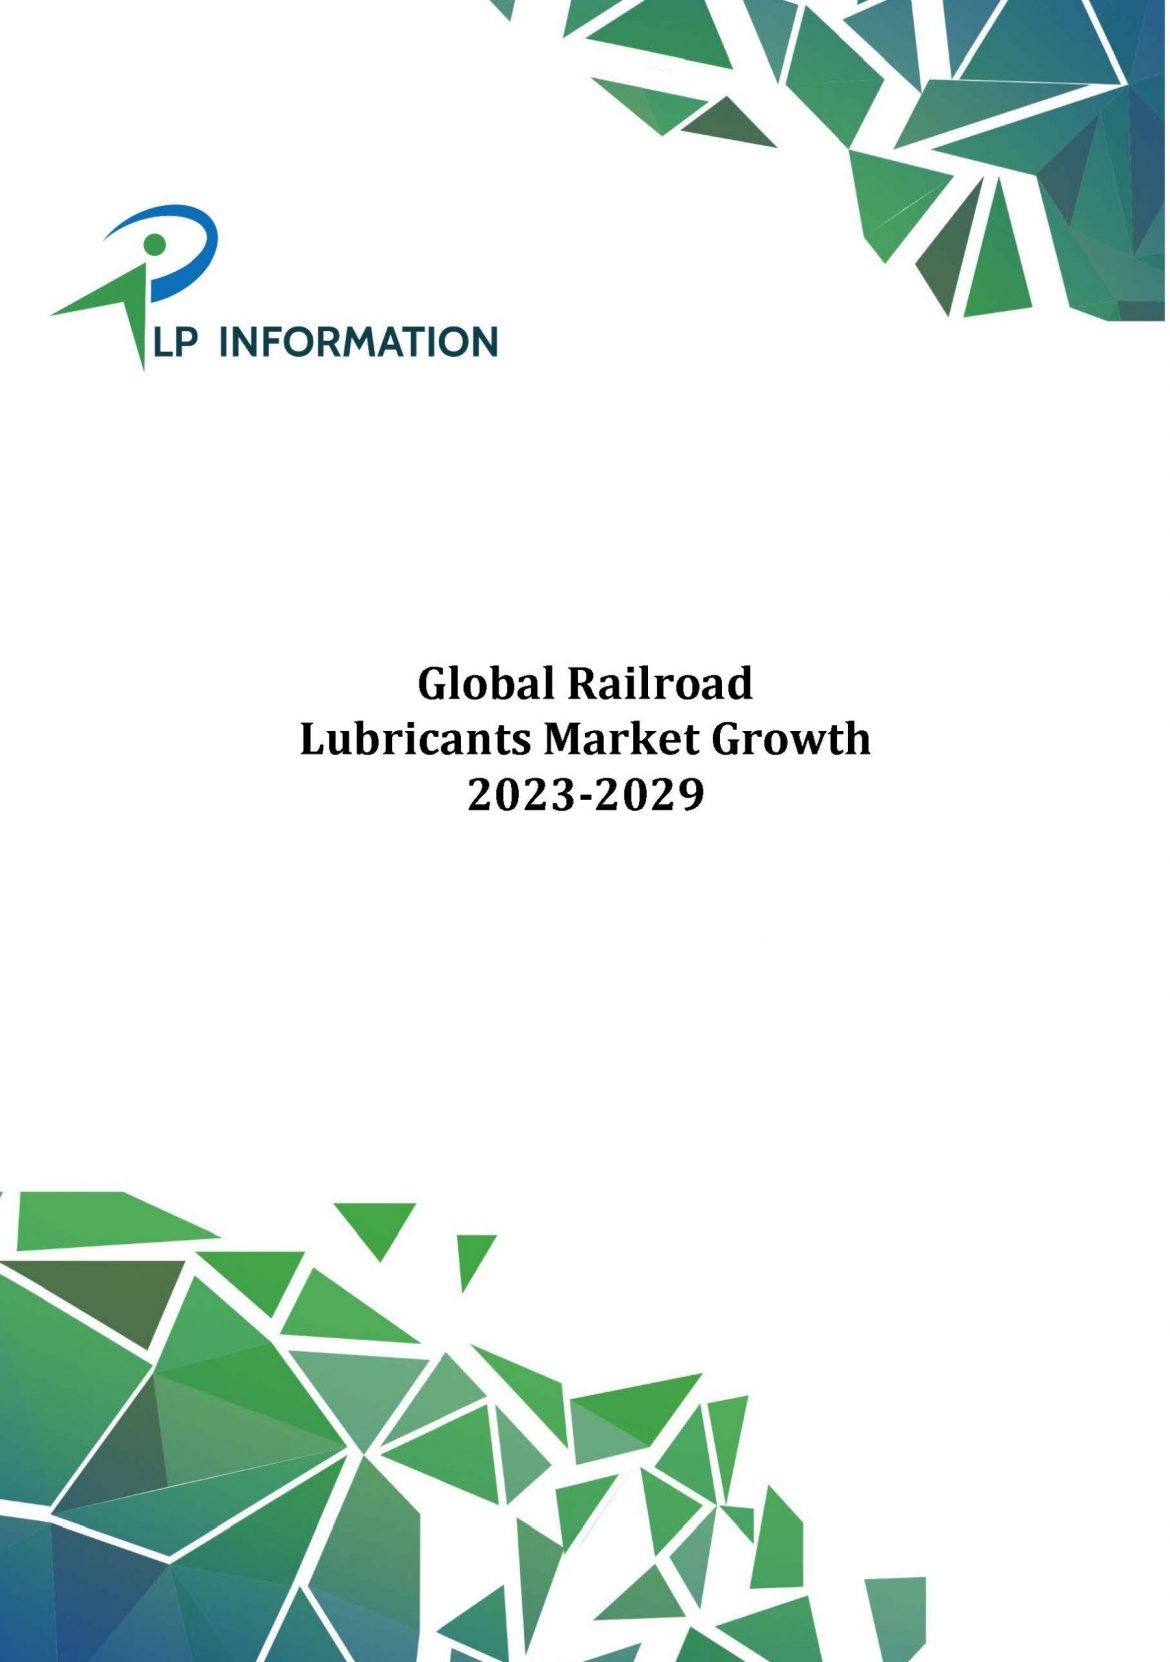 Global Railroad Lubricants Market Growth 2023-2029